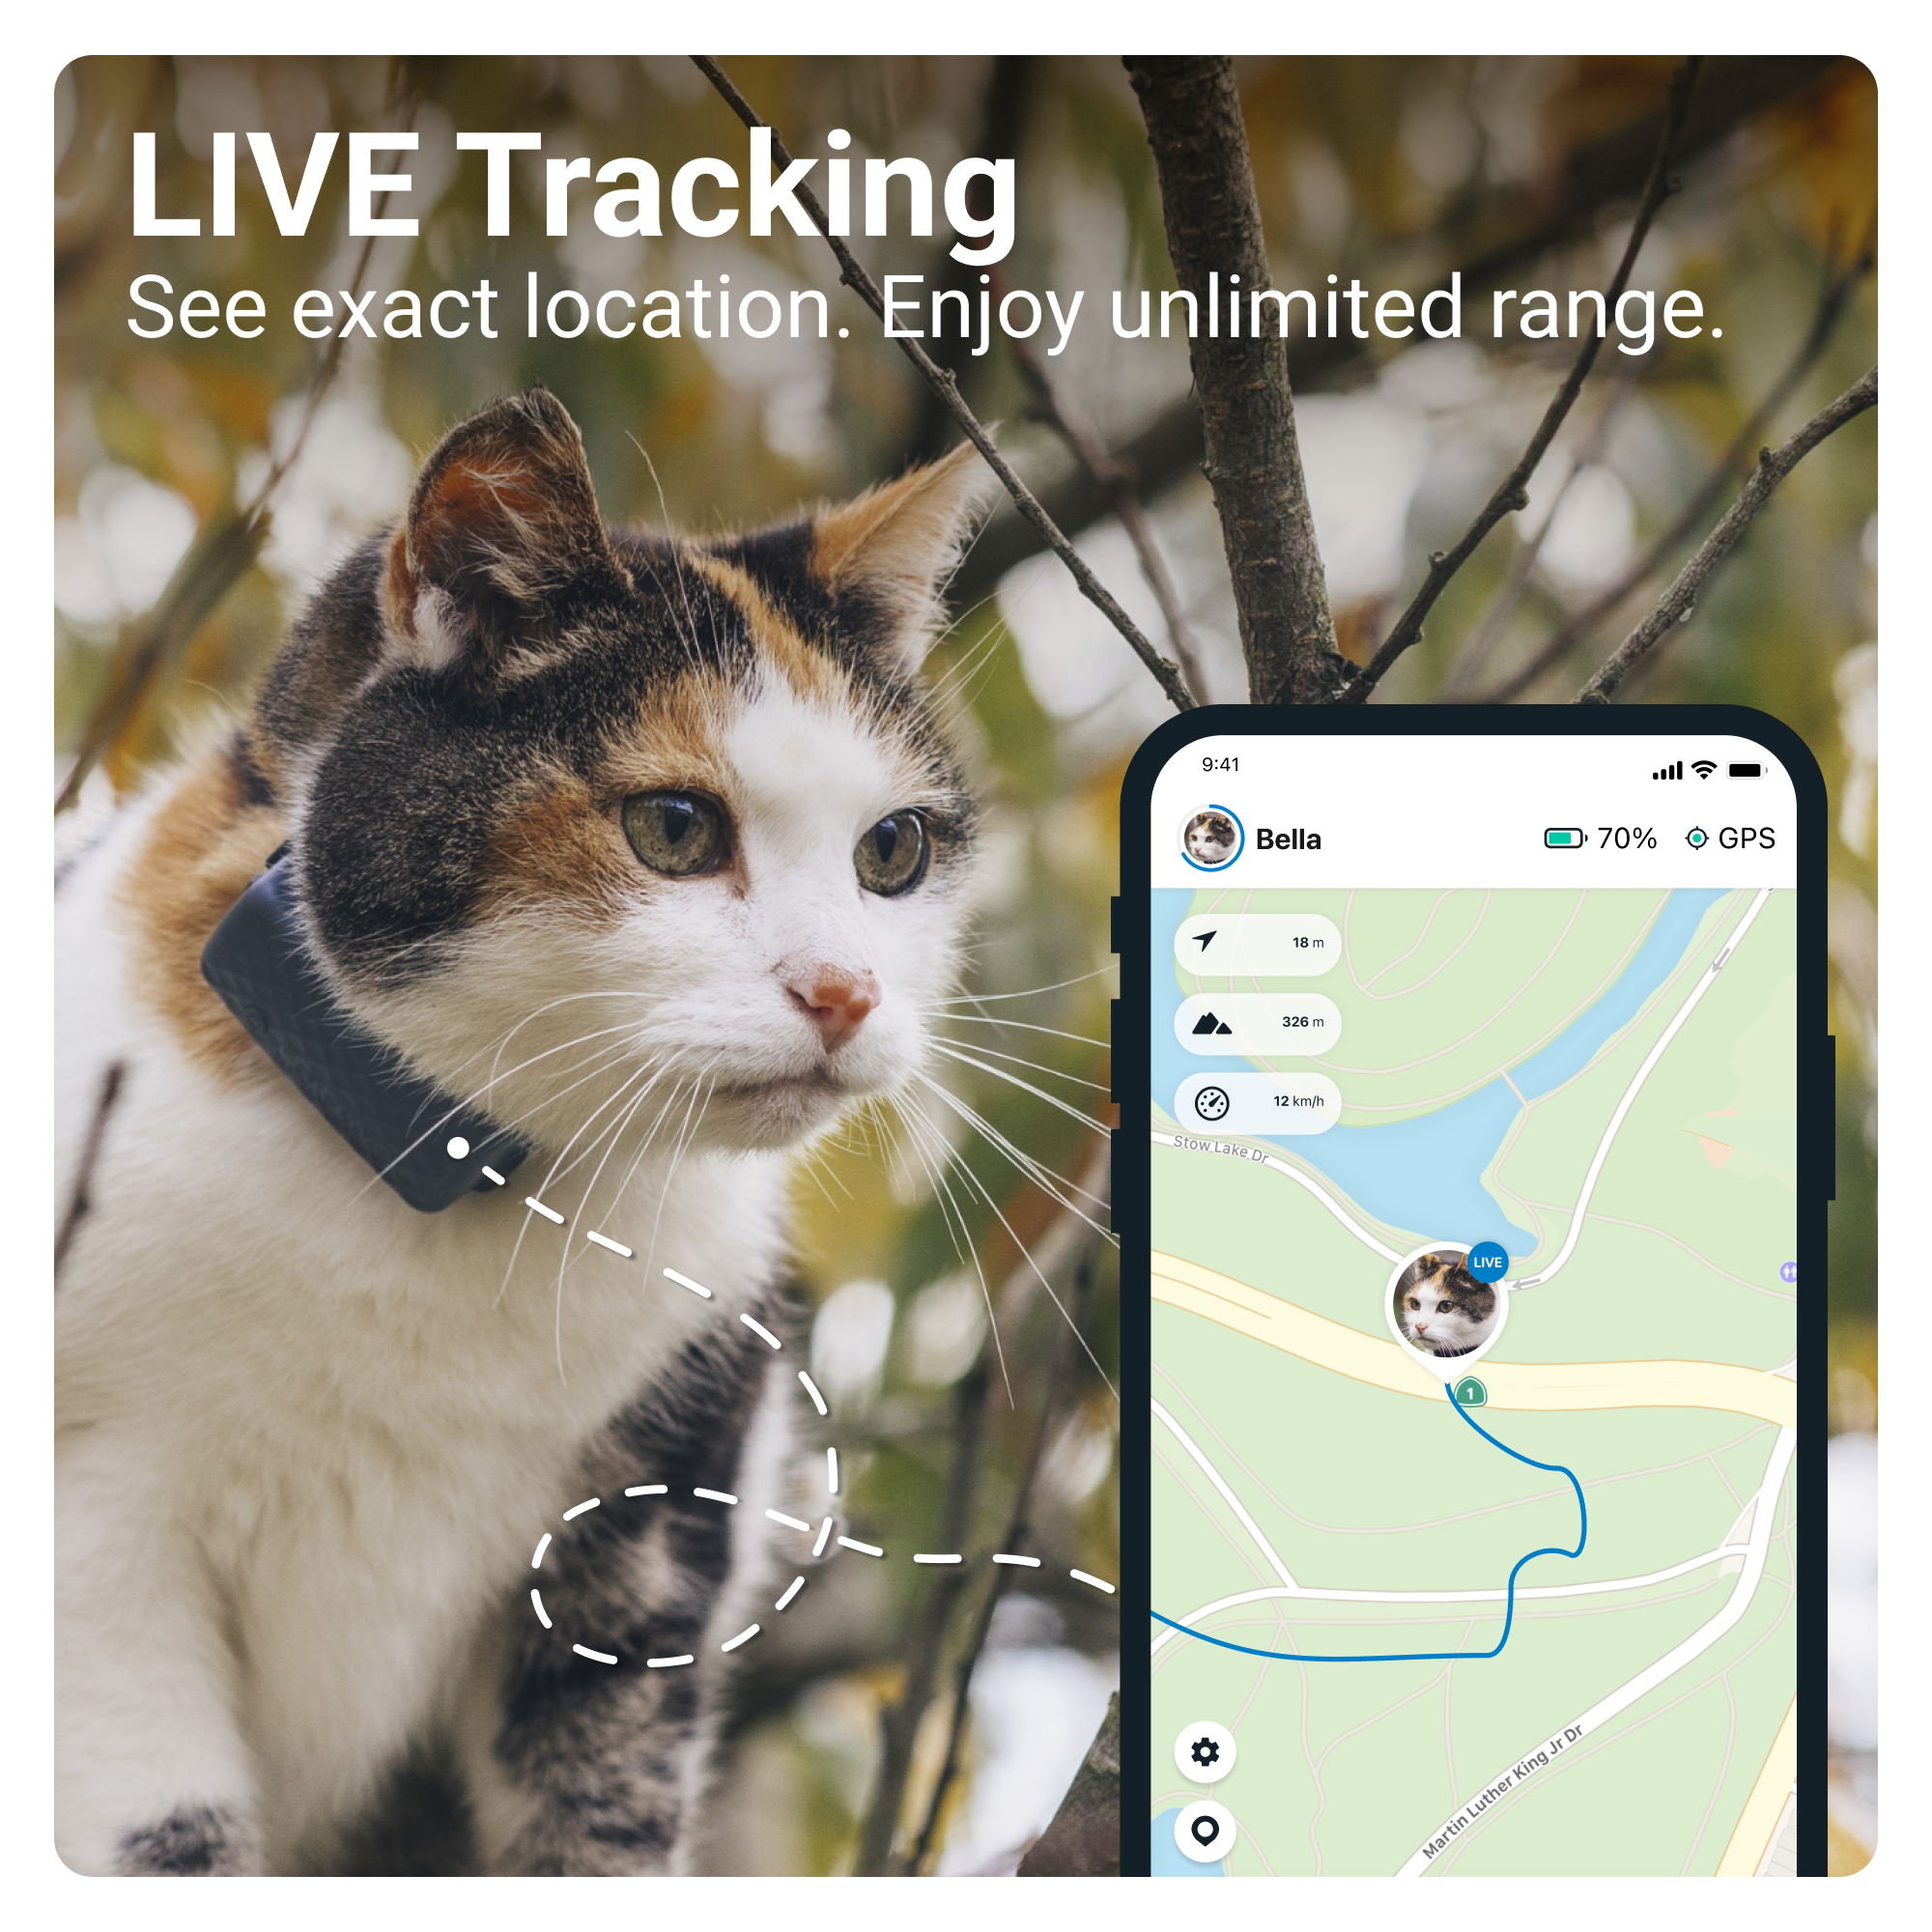 Tractive CAT Mini – GPS Tracker & Activity Monitor for Cats w